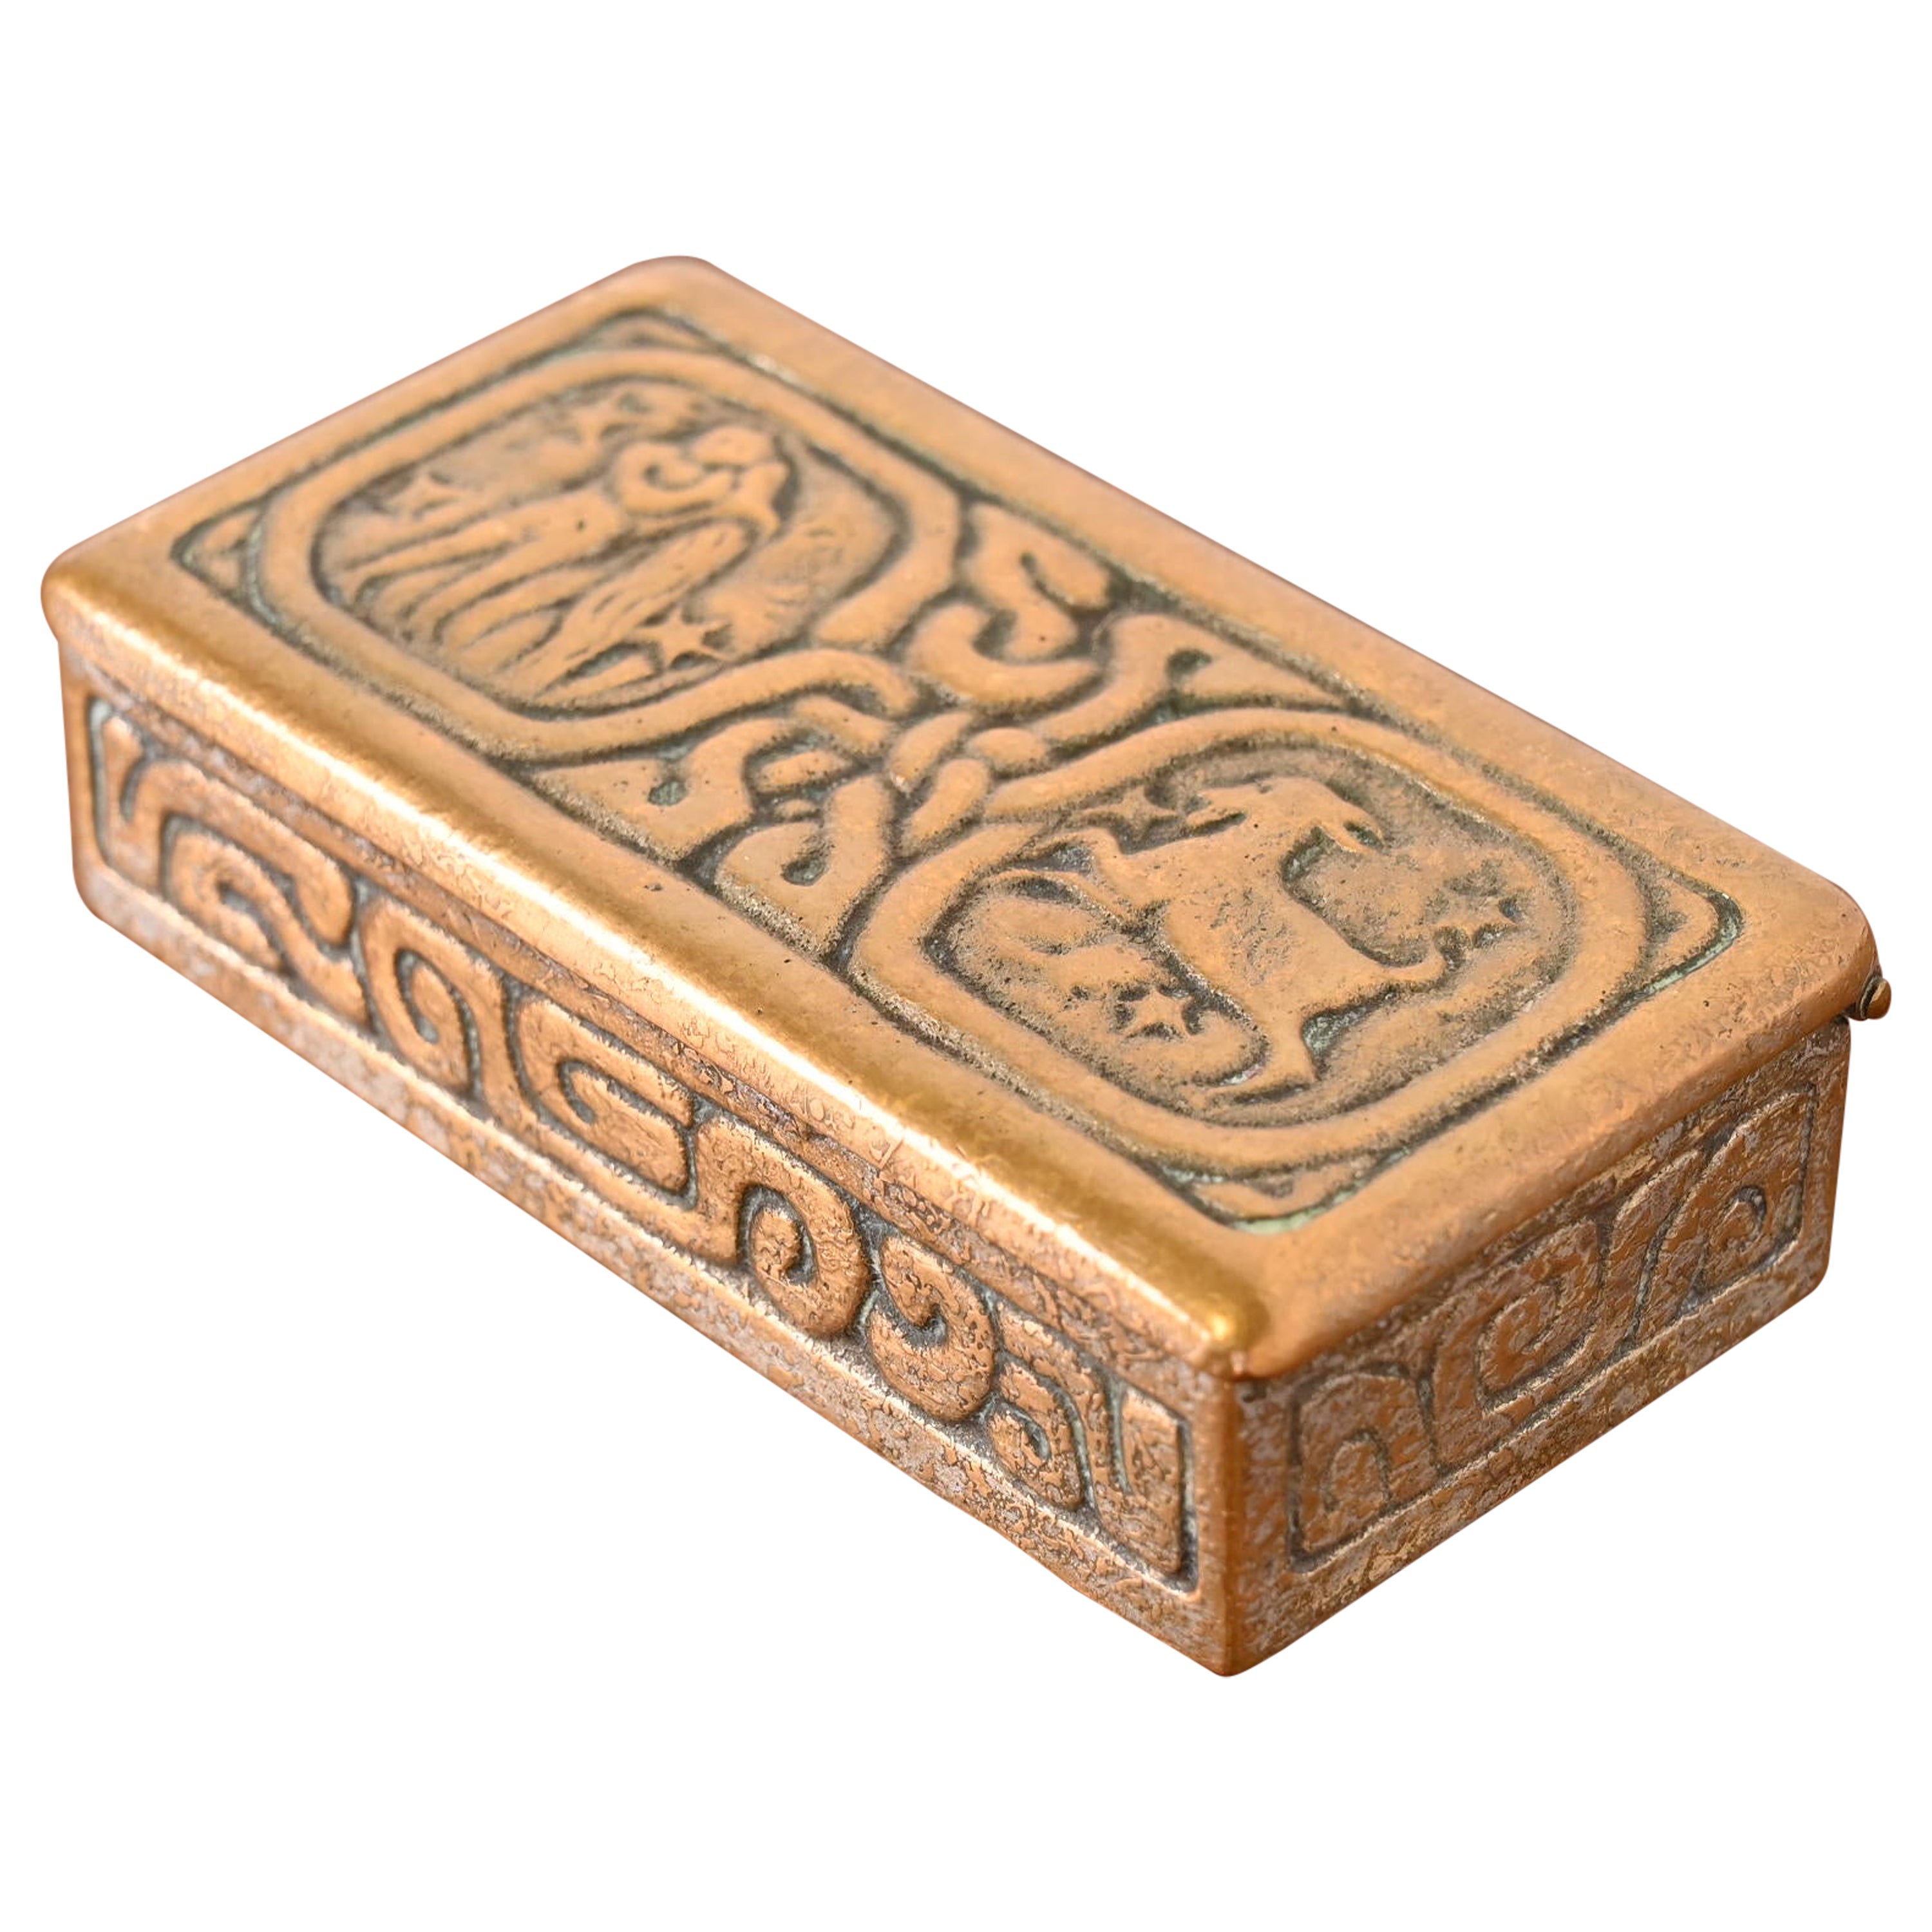 Tiffany Studios New York Zodiac Bronze Doré Stamp Box For Sale